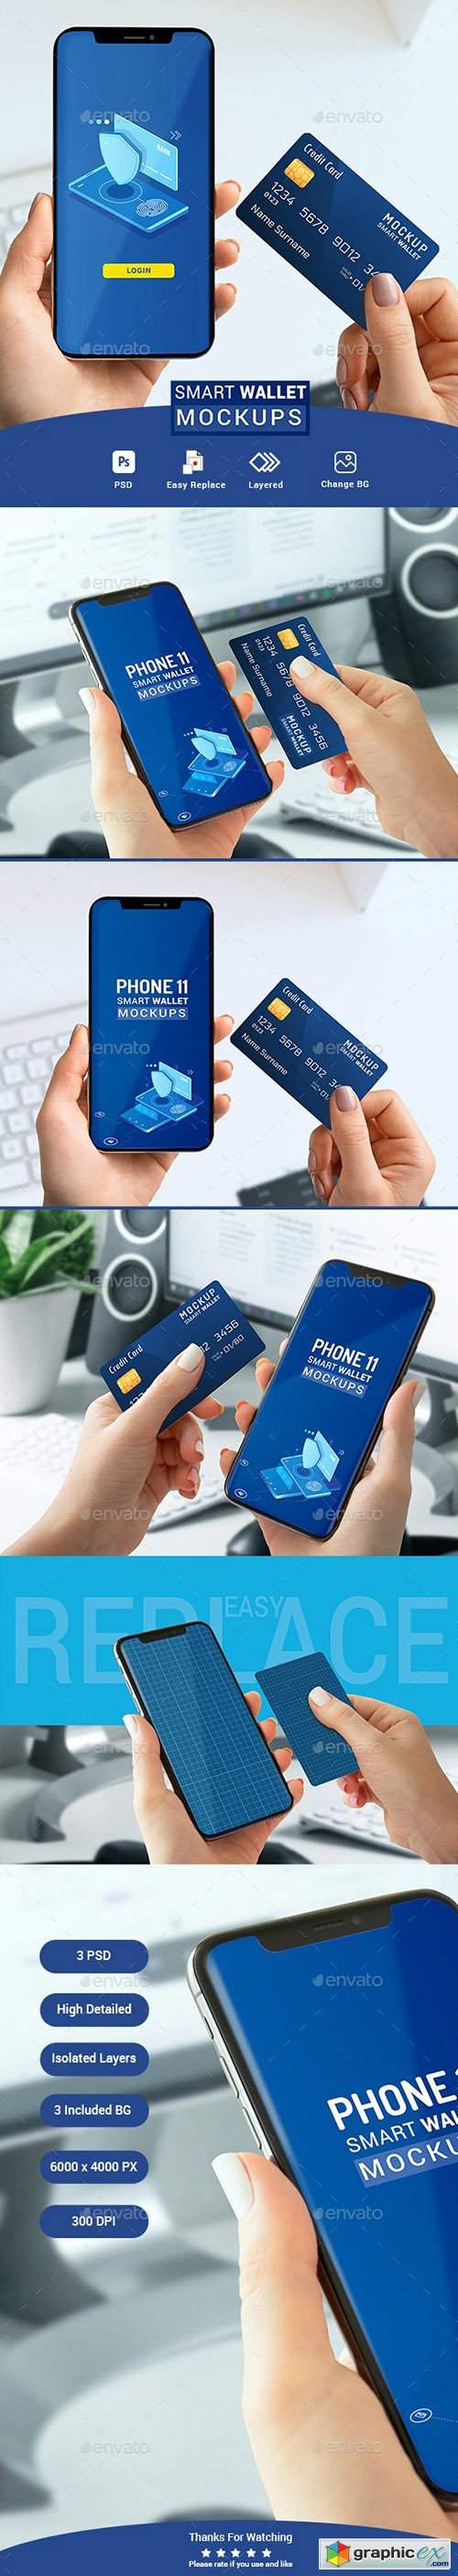 Phone 11 Smart wallet Mockups 